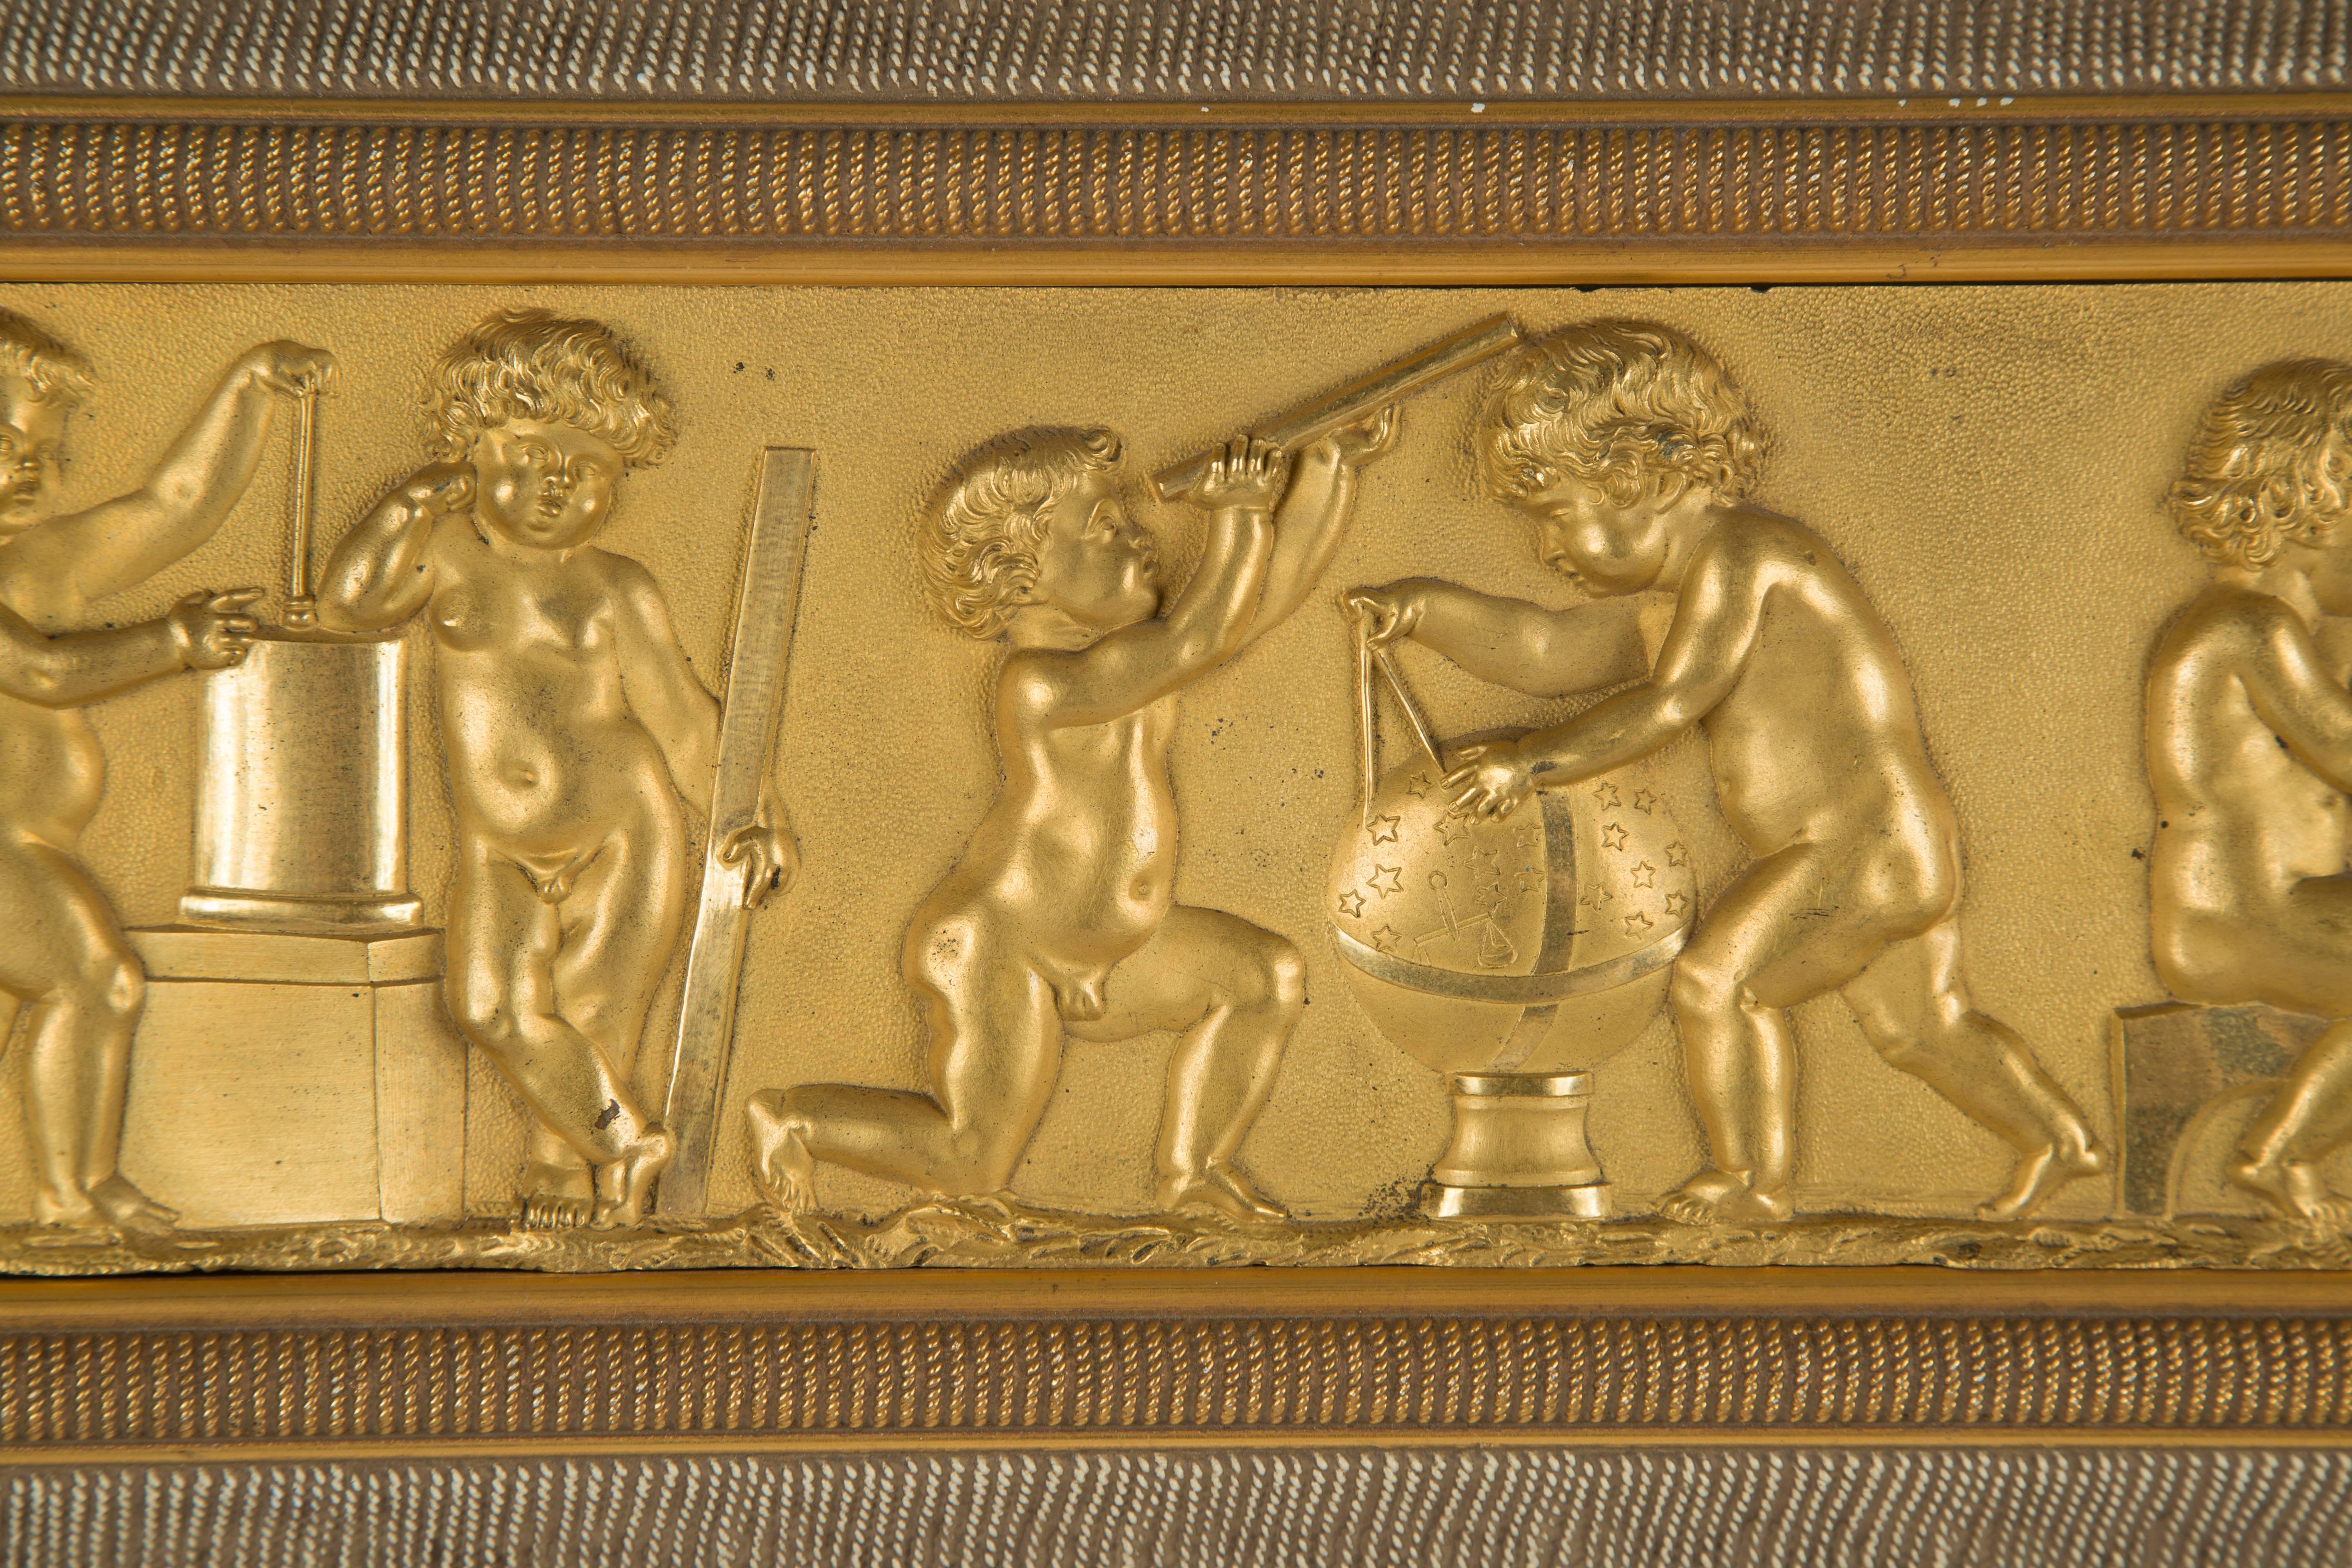 Mercury bronze narrative relief with putti figures in different scenes.